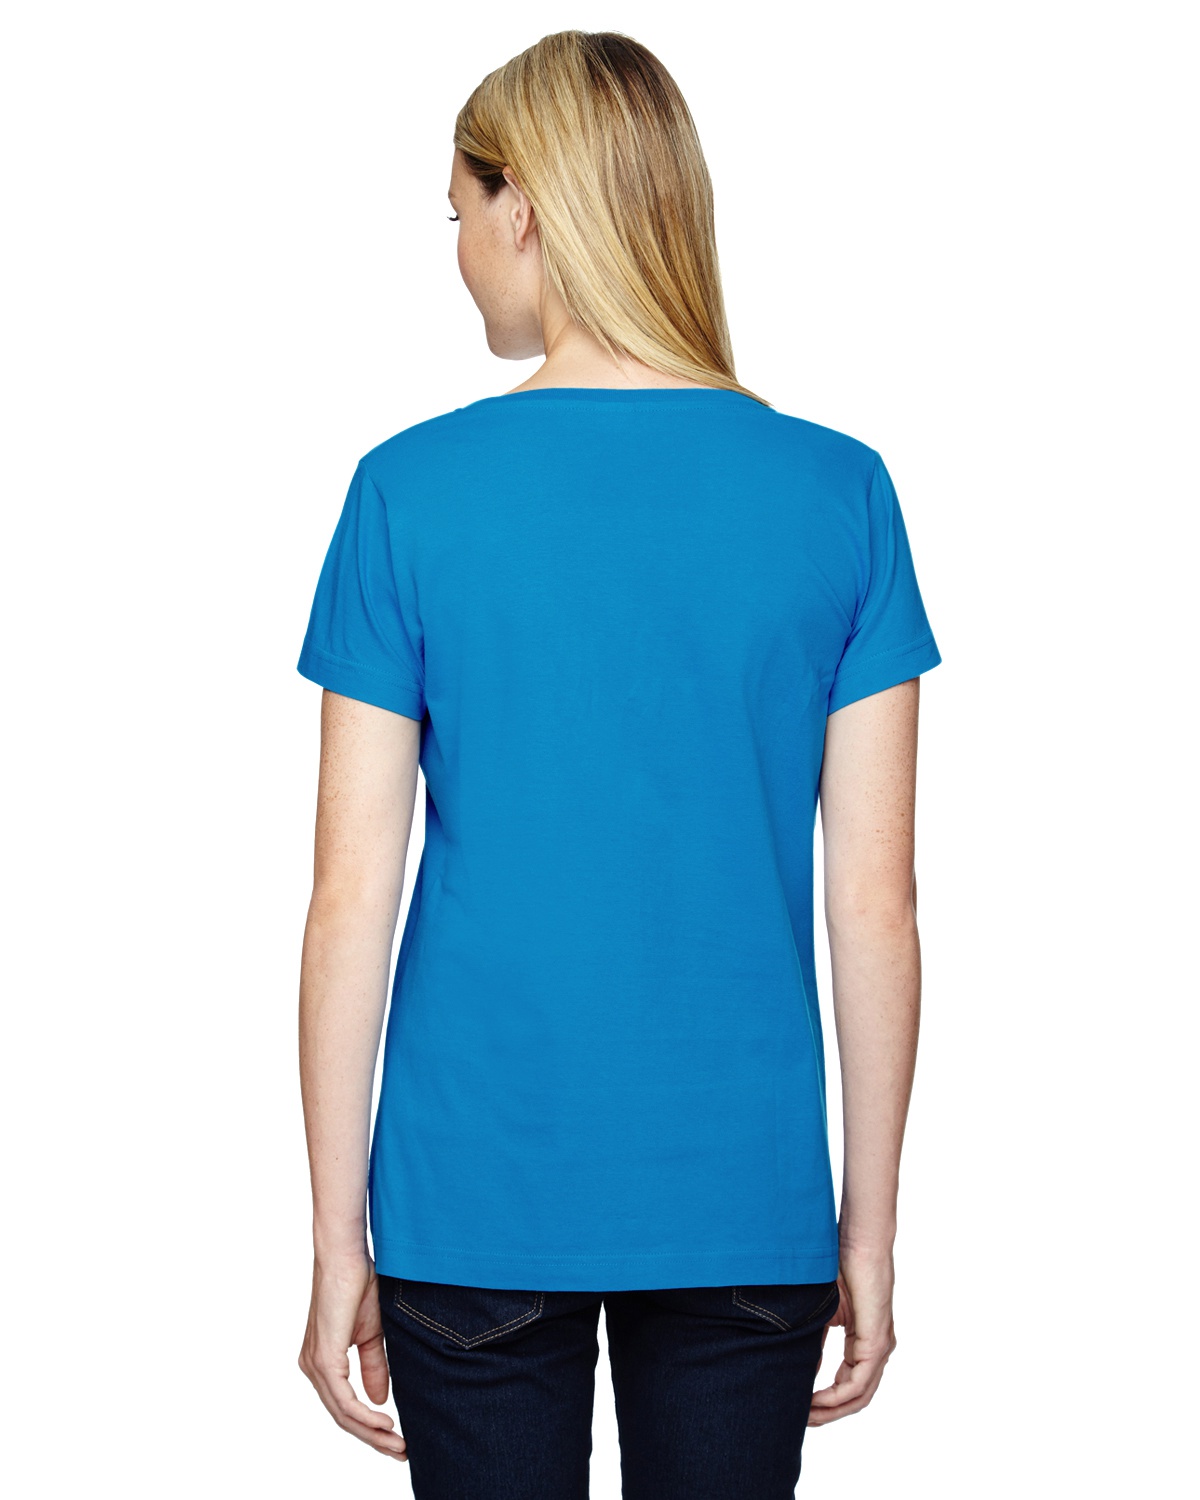 'LAT 3504 Ladies' Scoop Neck Fine Jersey T-Shirt'